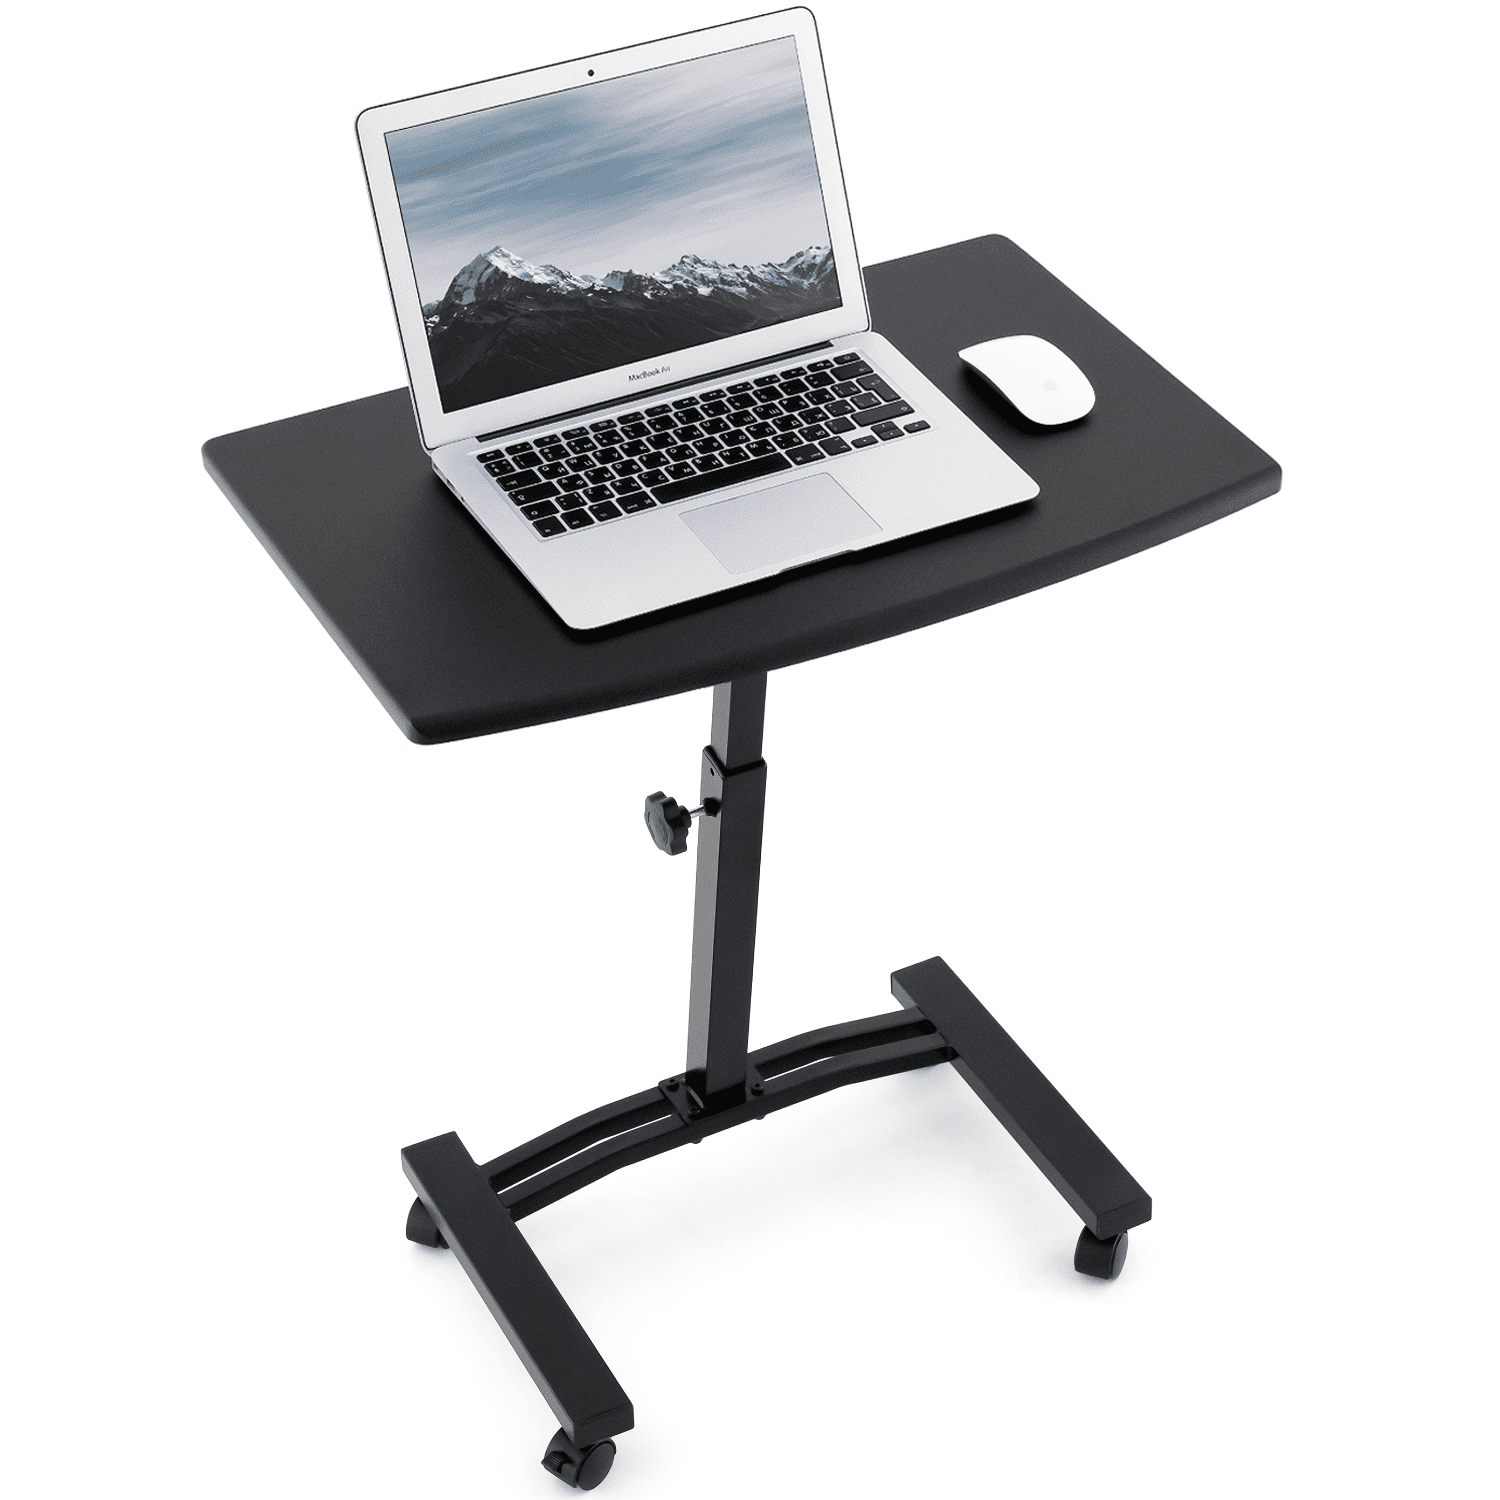 Tatkraft Dream - Mobile Laptop Stand Desk, Adjustable Height 52-84cm